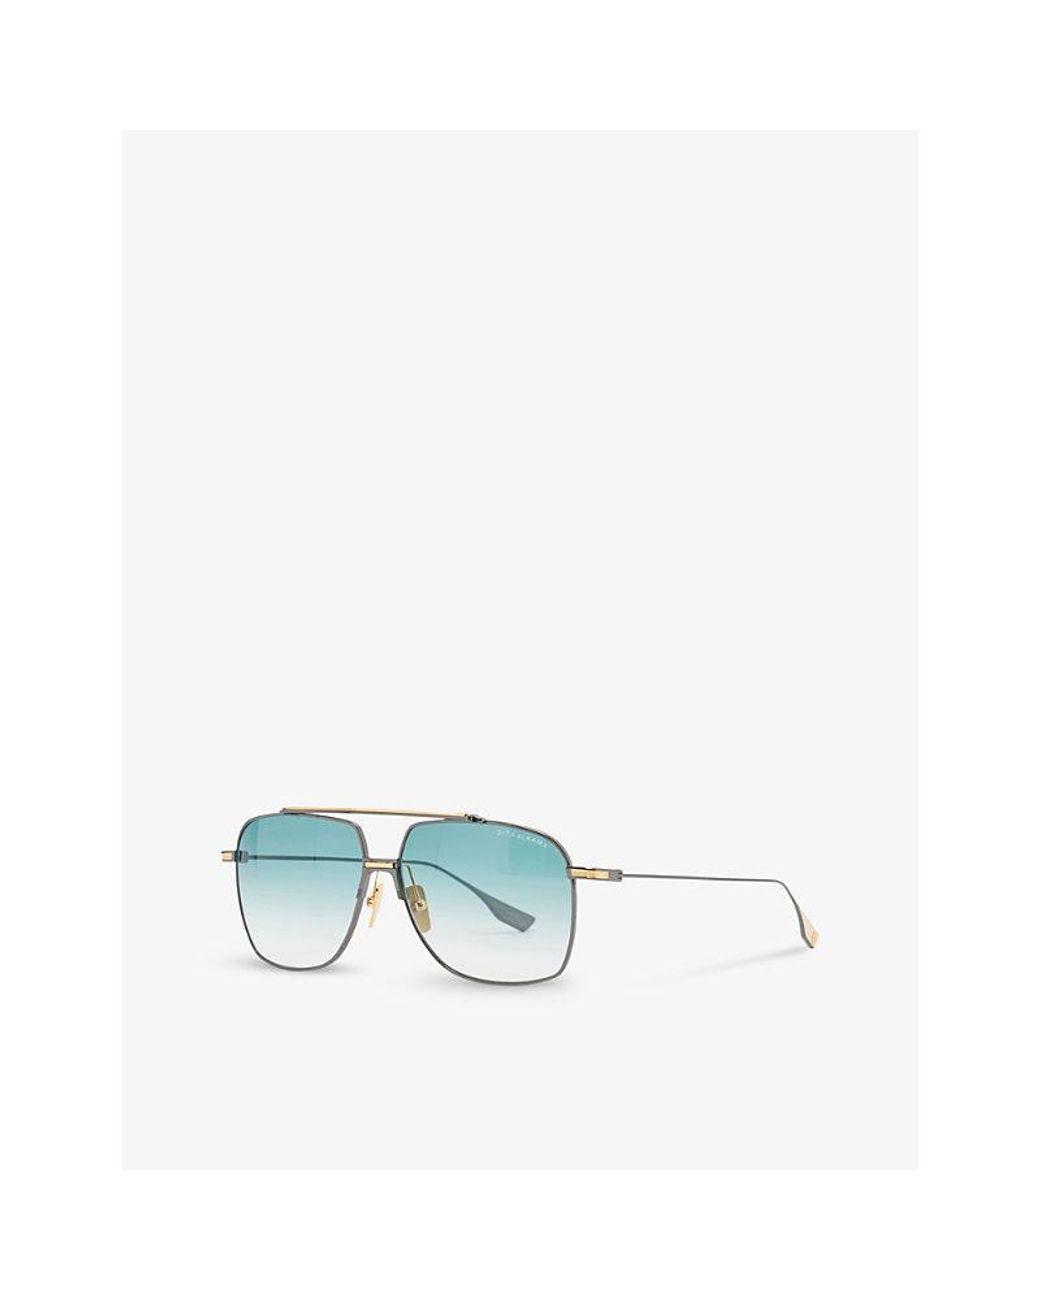 Dita Eyewear Dts-100 Alkamx Pilot-frame Acetate Sunglasses in Blue